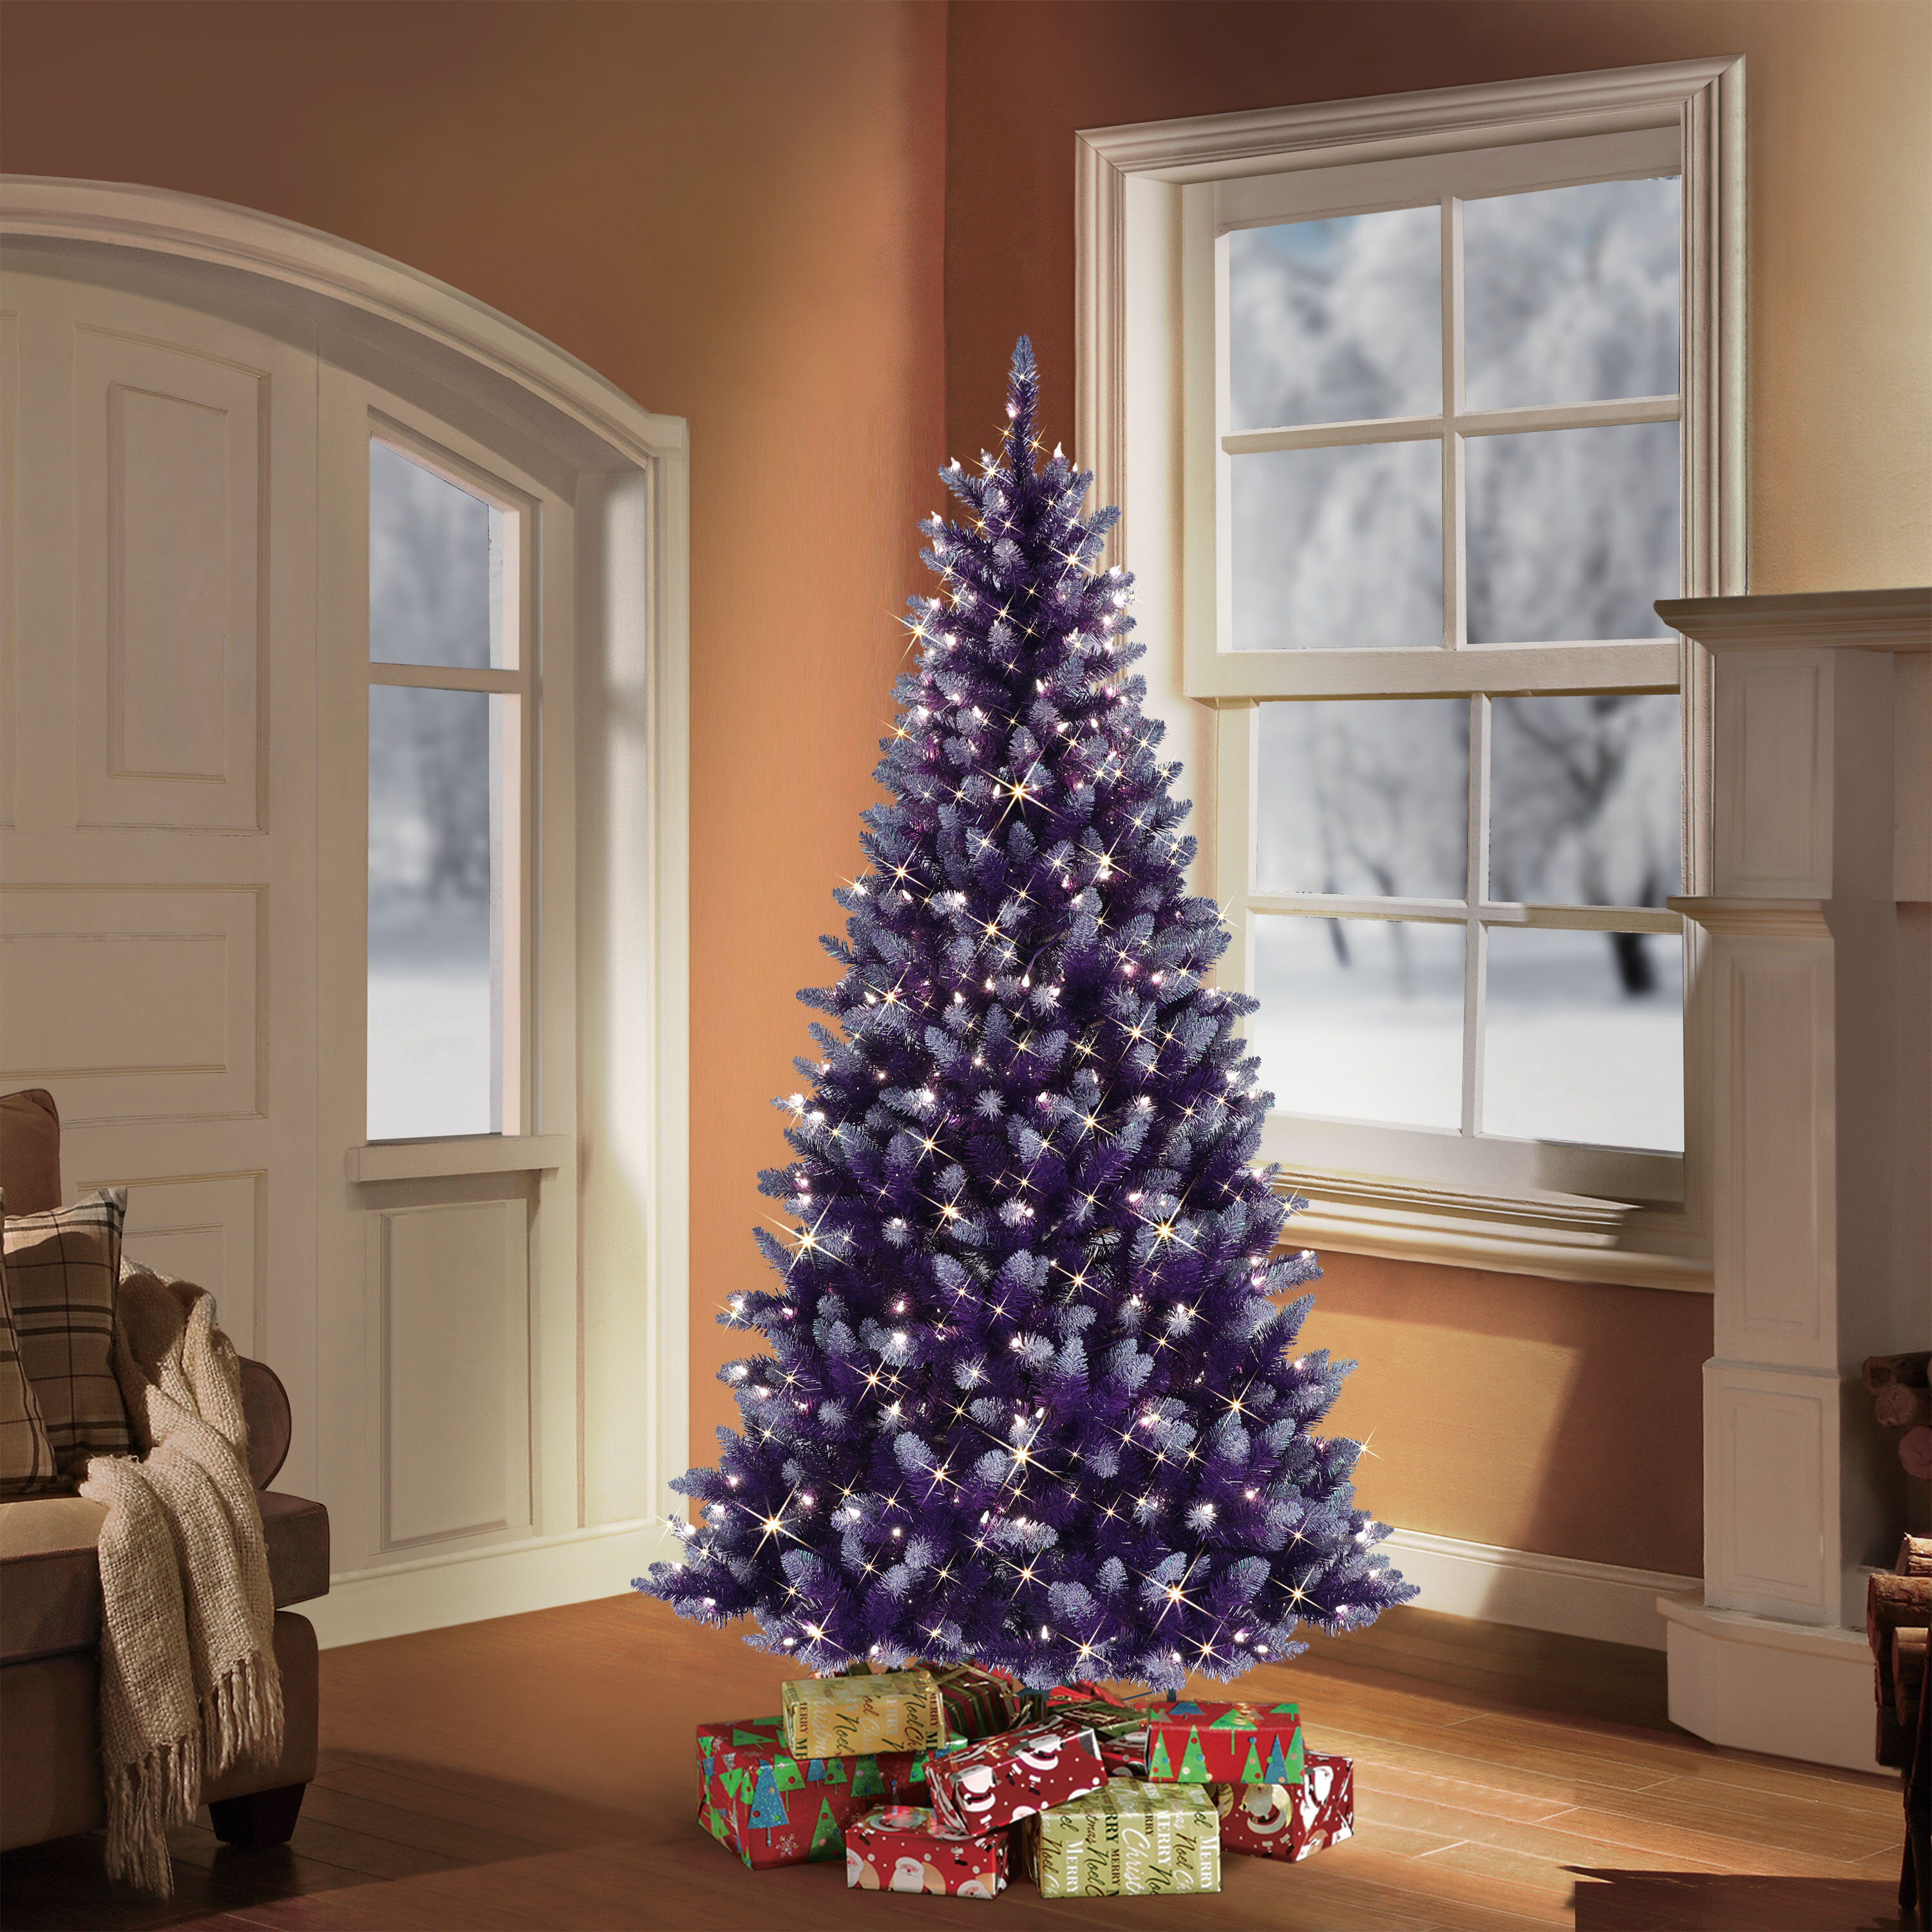 5D Diamond Painting Purple and Gold Christmas Tree Kit - Bonanza Marketplace